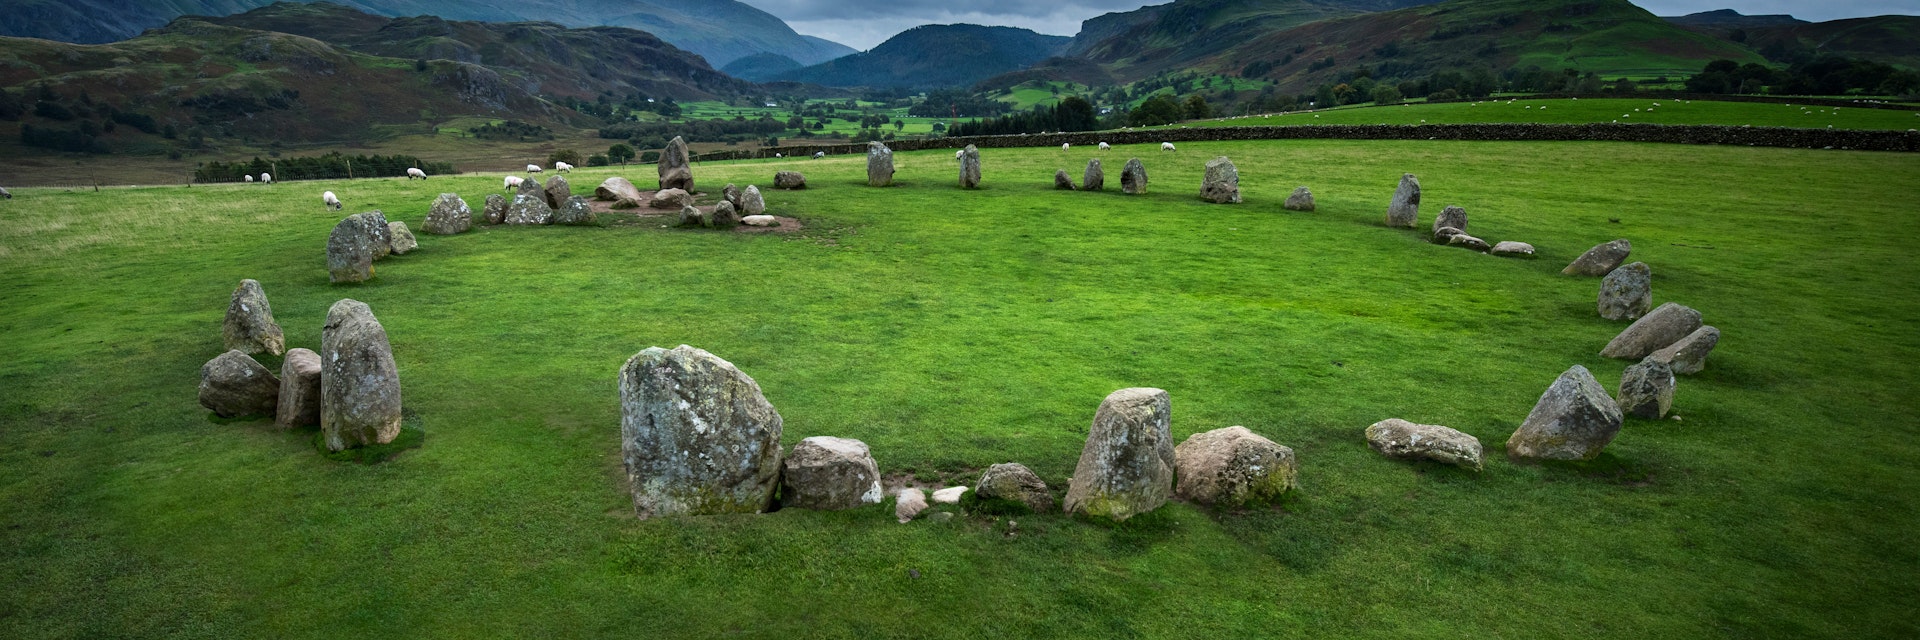 Castlerigg stone circle near Keswick in the English Lake District.